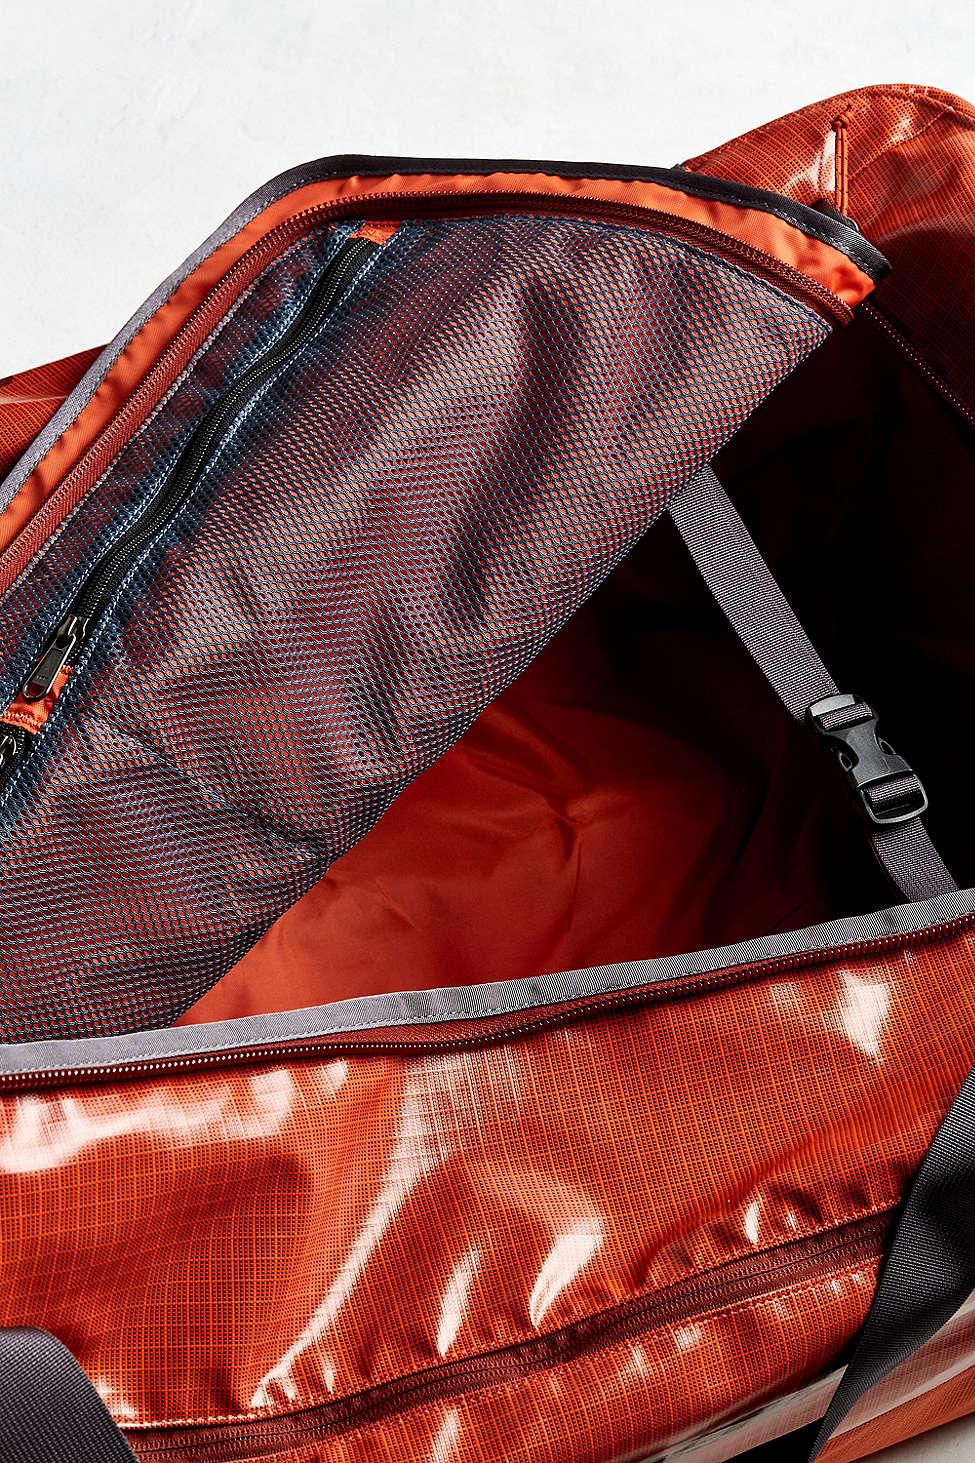 Patagonia Black Hole® Wheeled Duffel Bag 120L